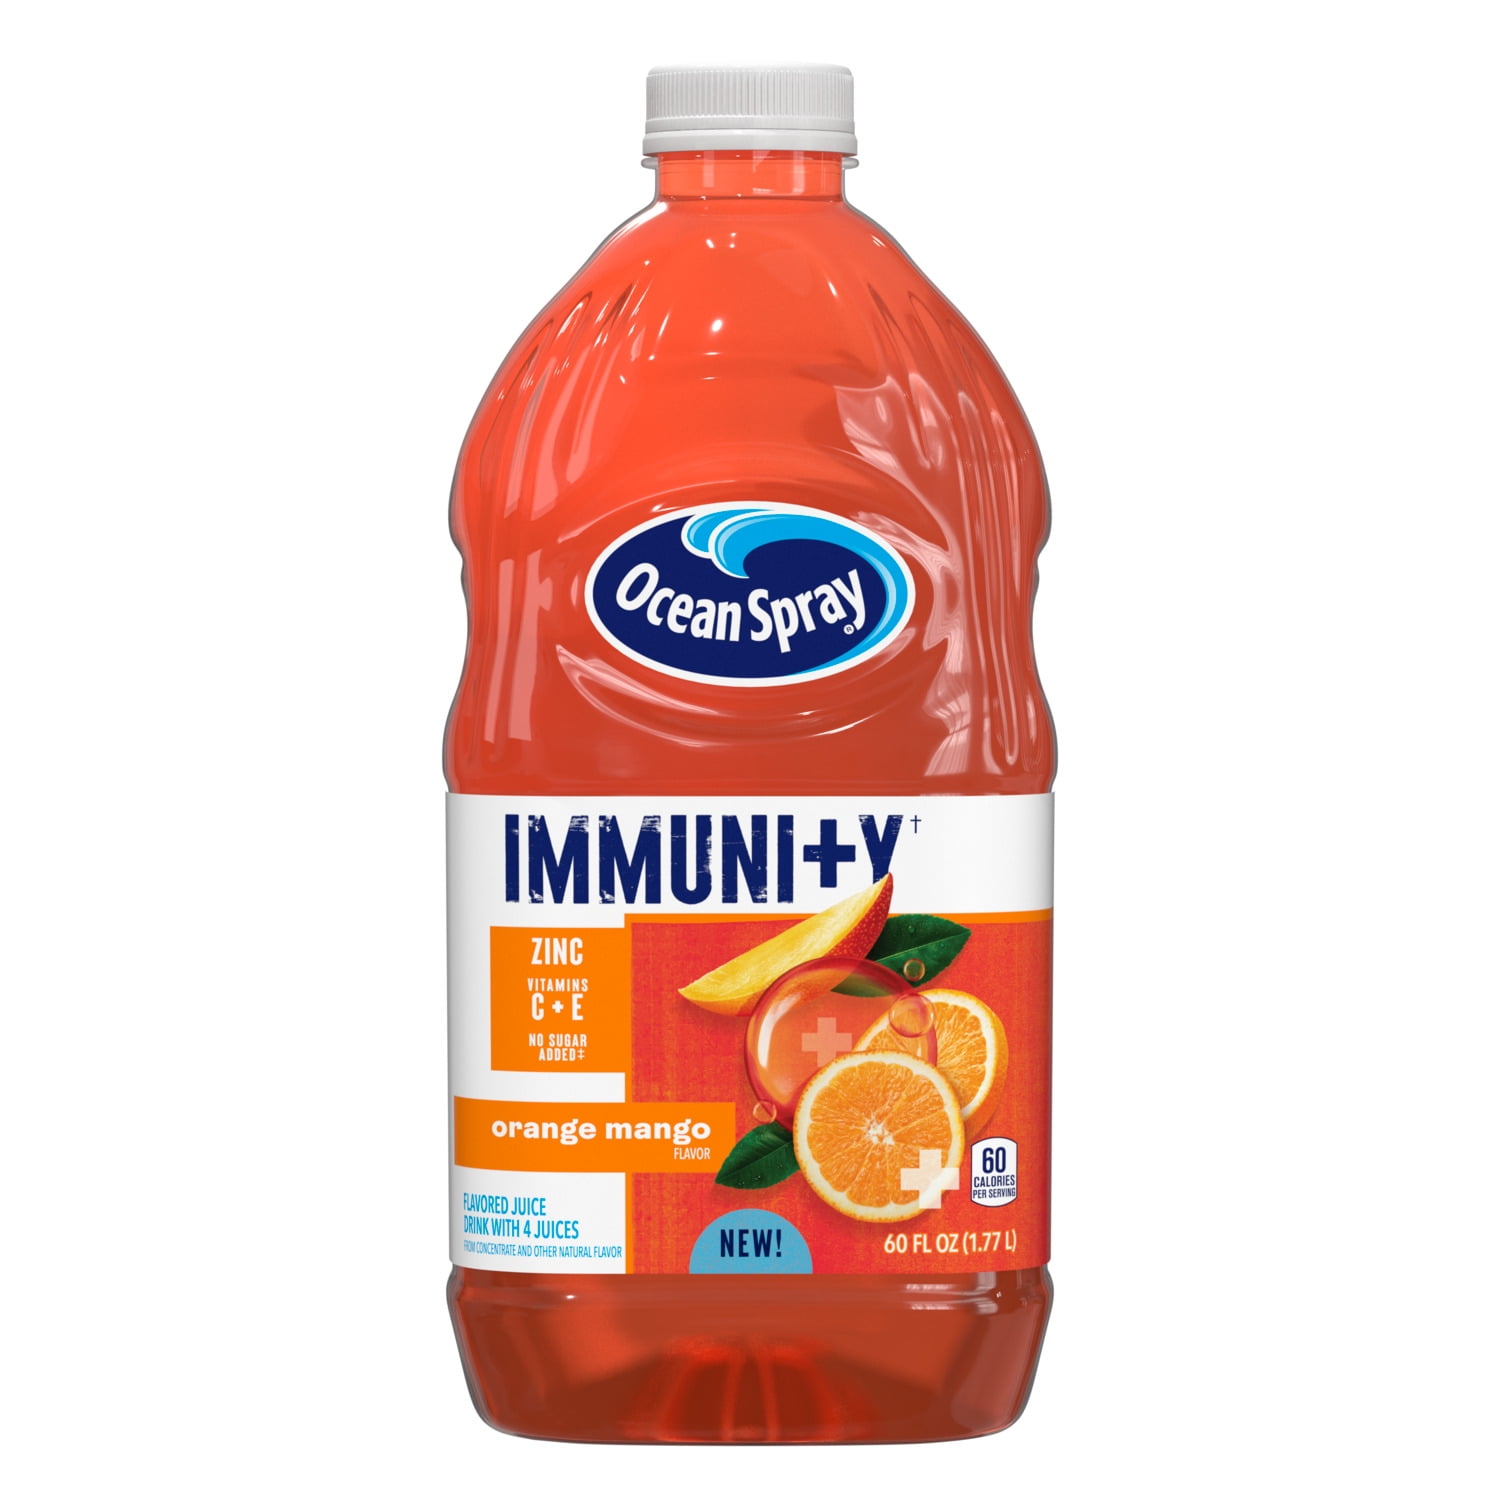 Ocean Spray Immunity Orange Mango Juice Drink, 60 fl oz Bottle